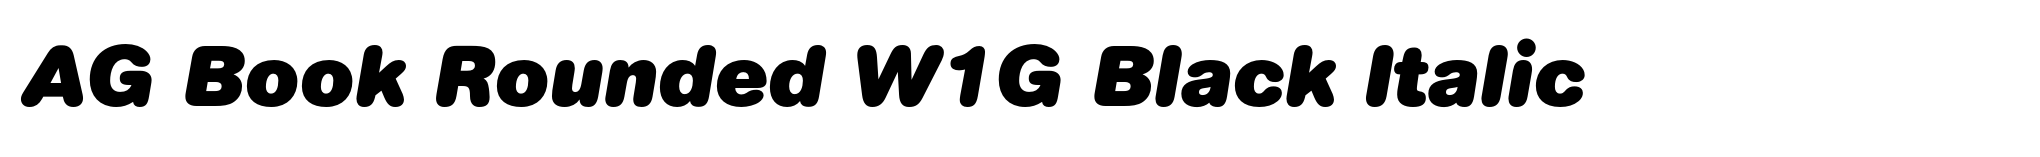 AG Book Rounded W1G Black Italic image